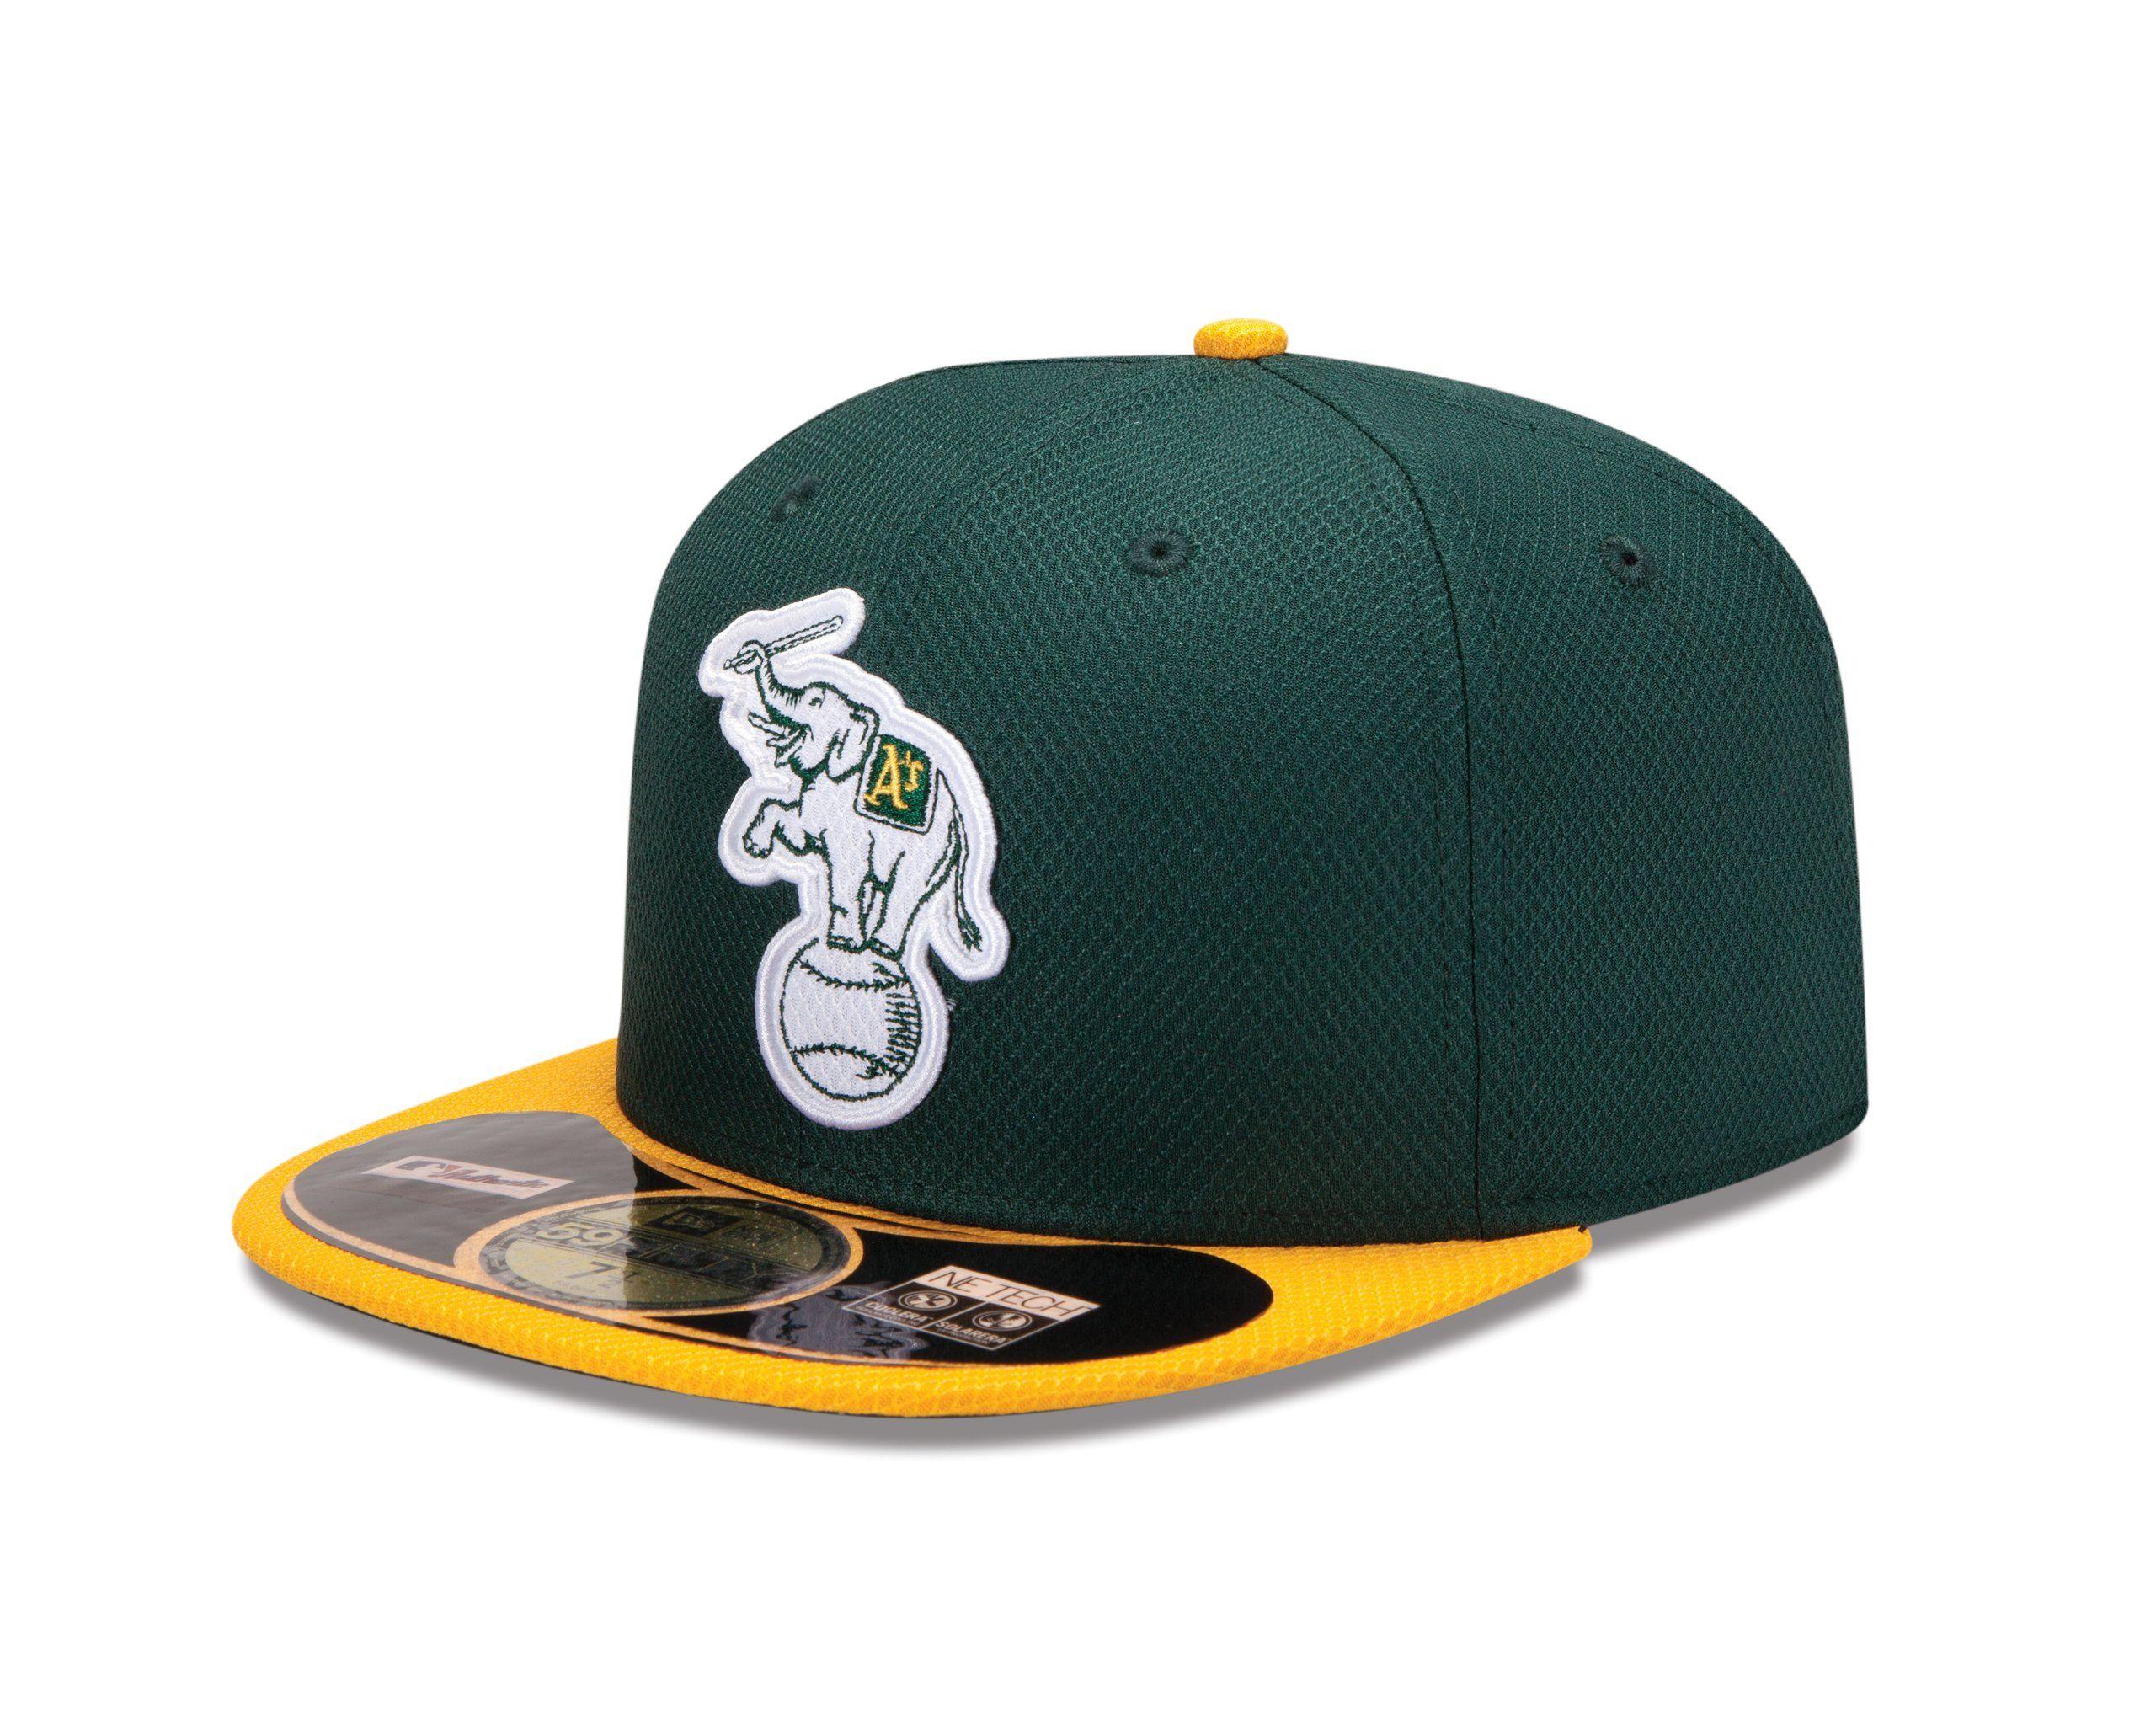 New Era 59Fifty Oakland A's batting practice hat, Stomper